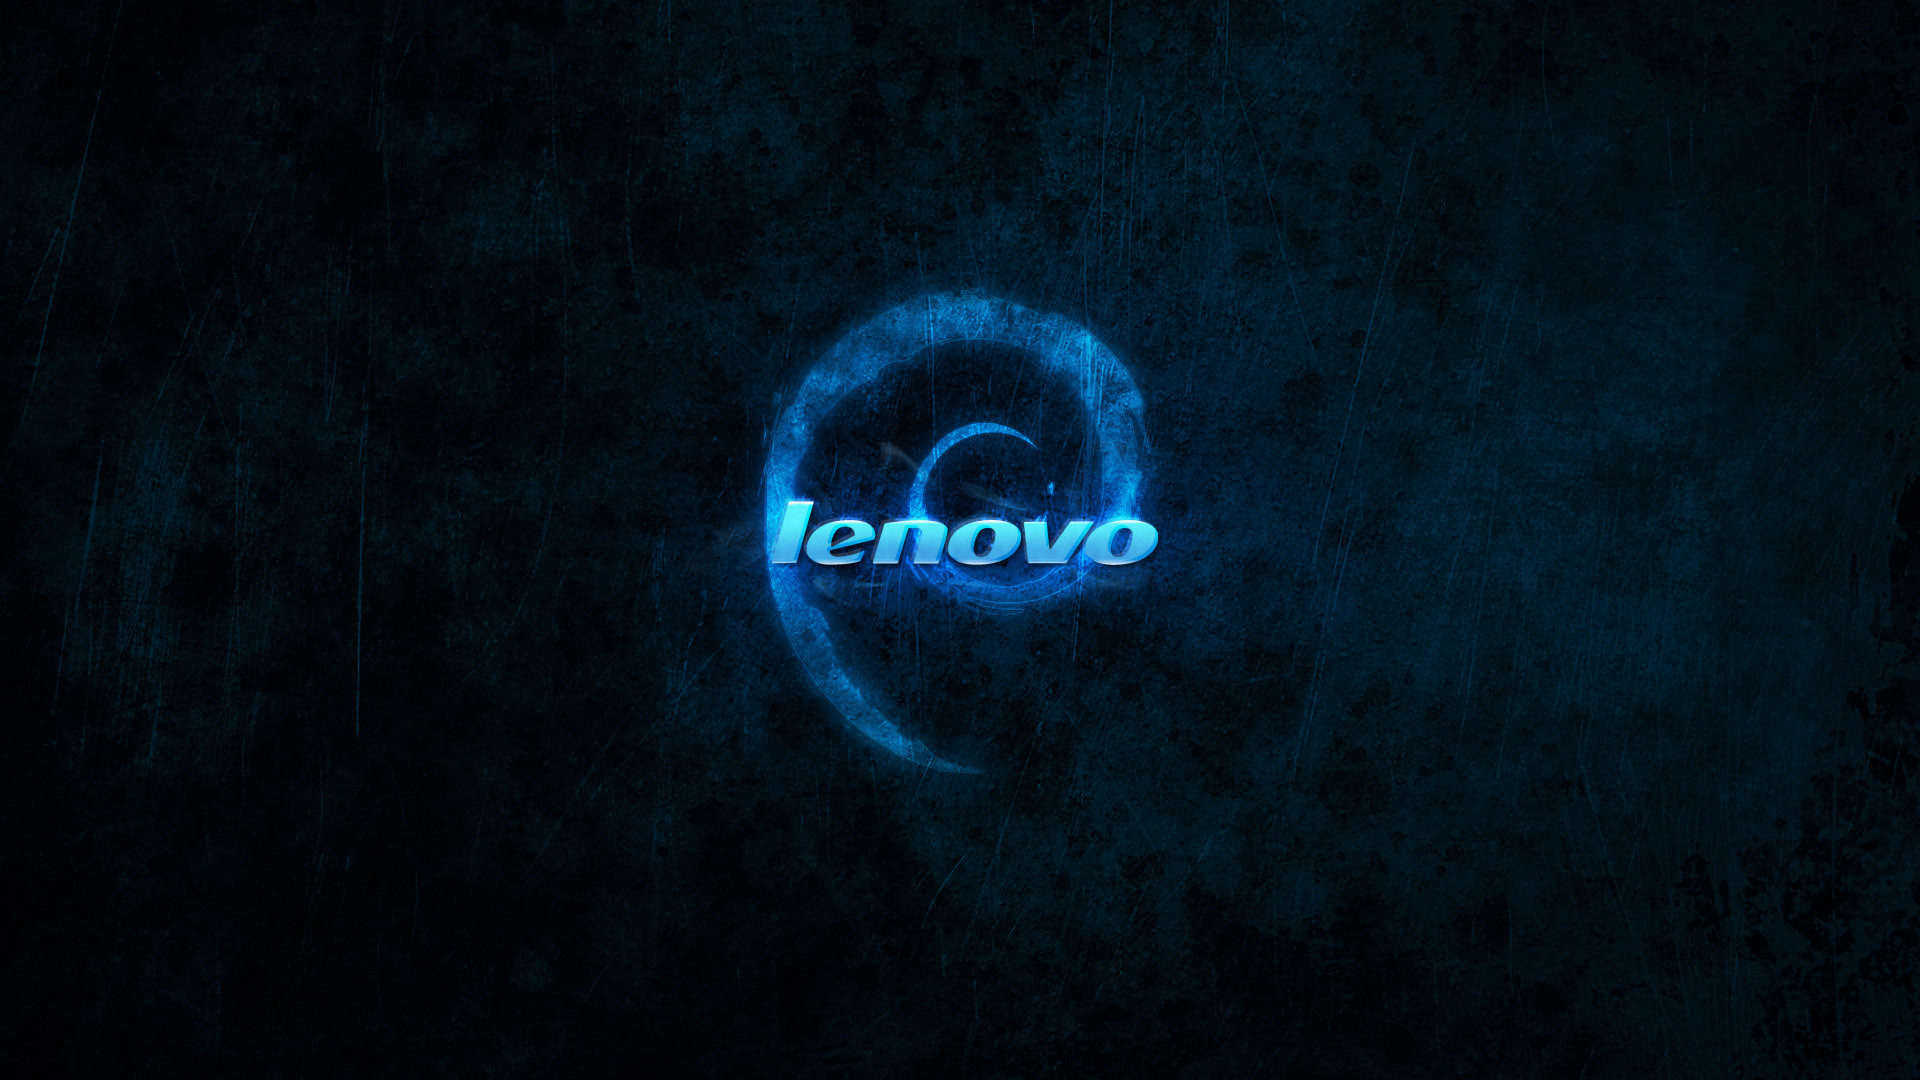 1920x1080 Debian Lenovo HD1080 wallpaper by malkowitch